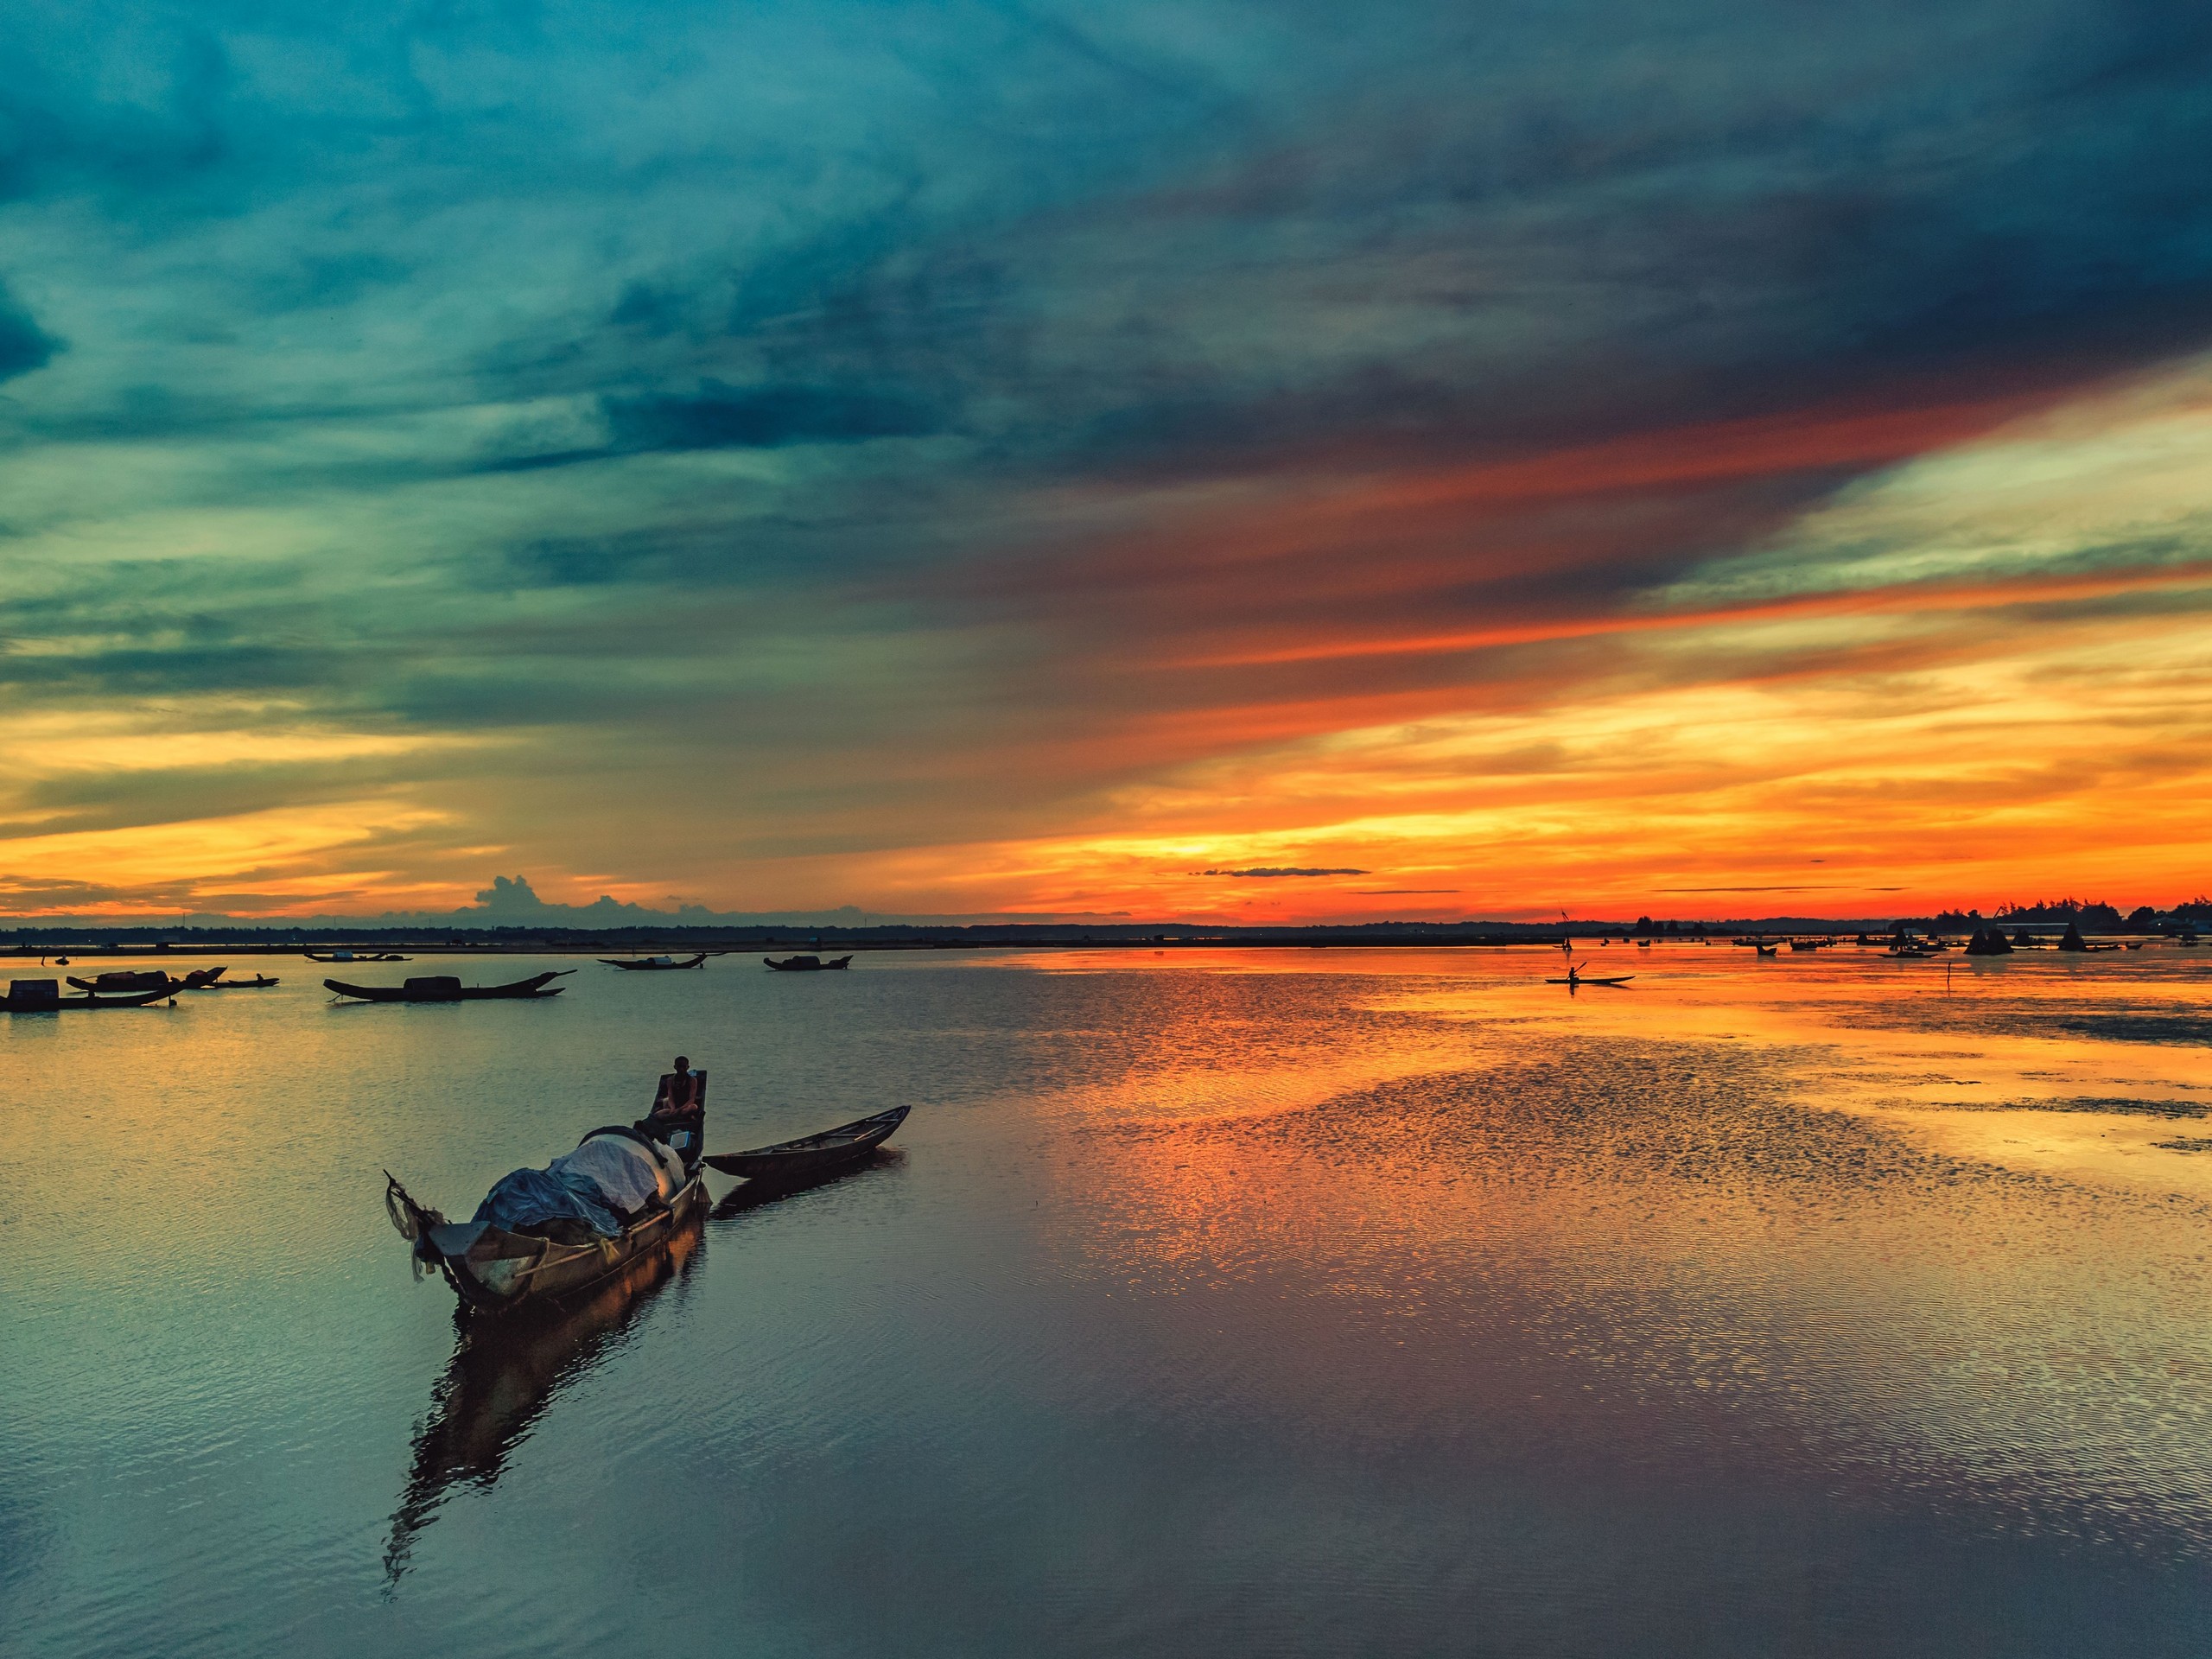 Sunset in Vietnam